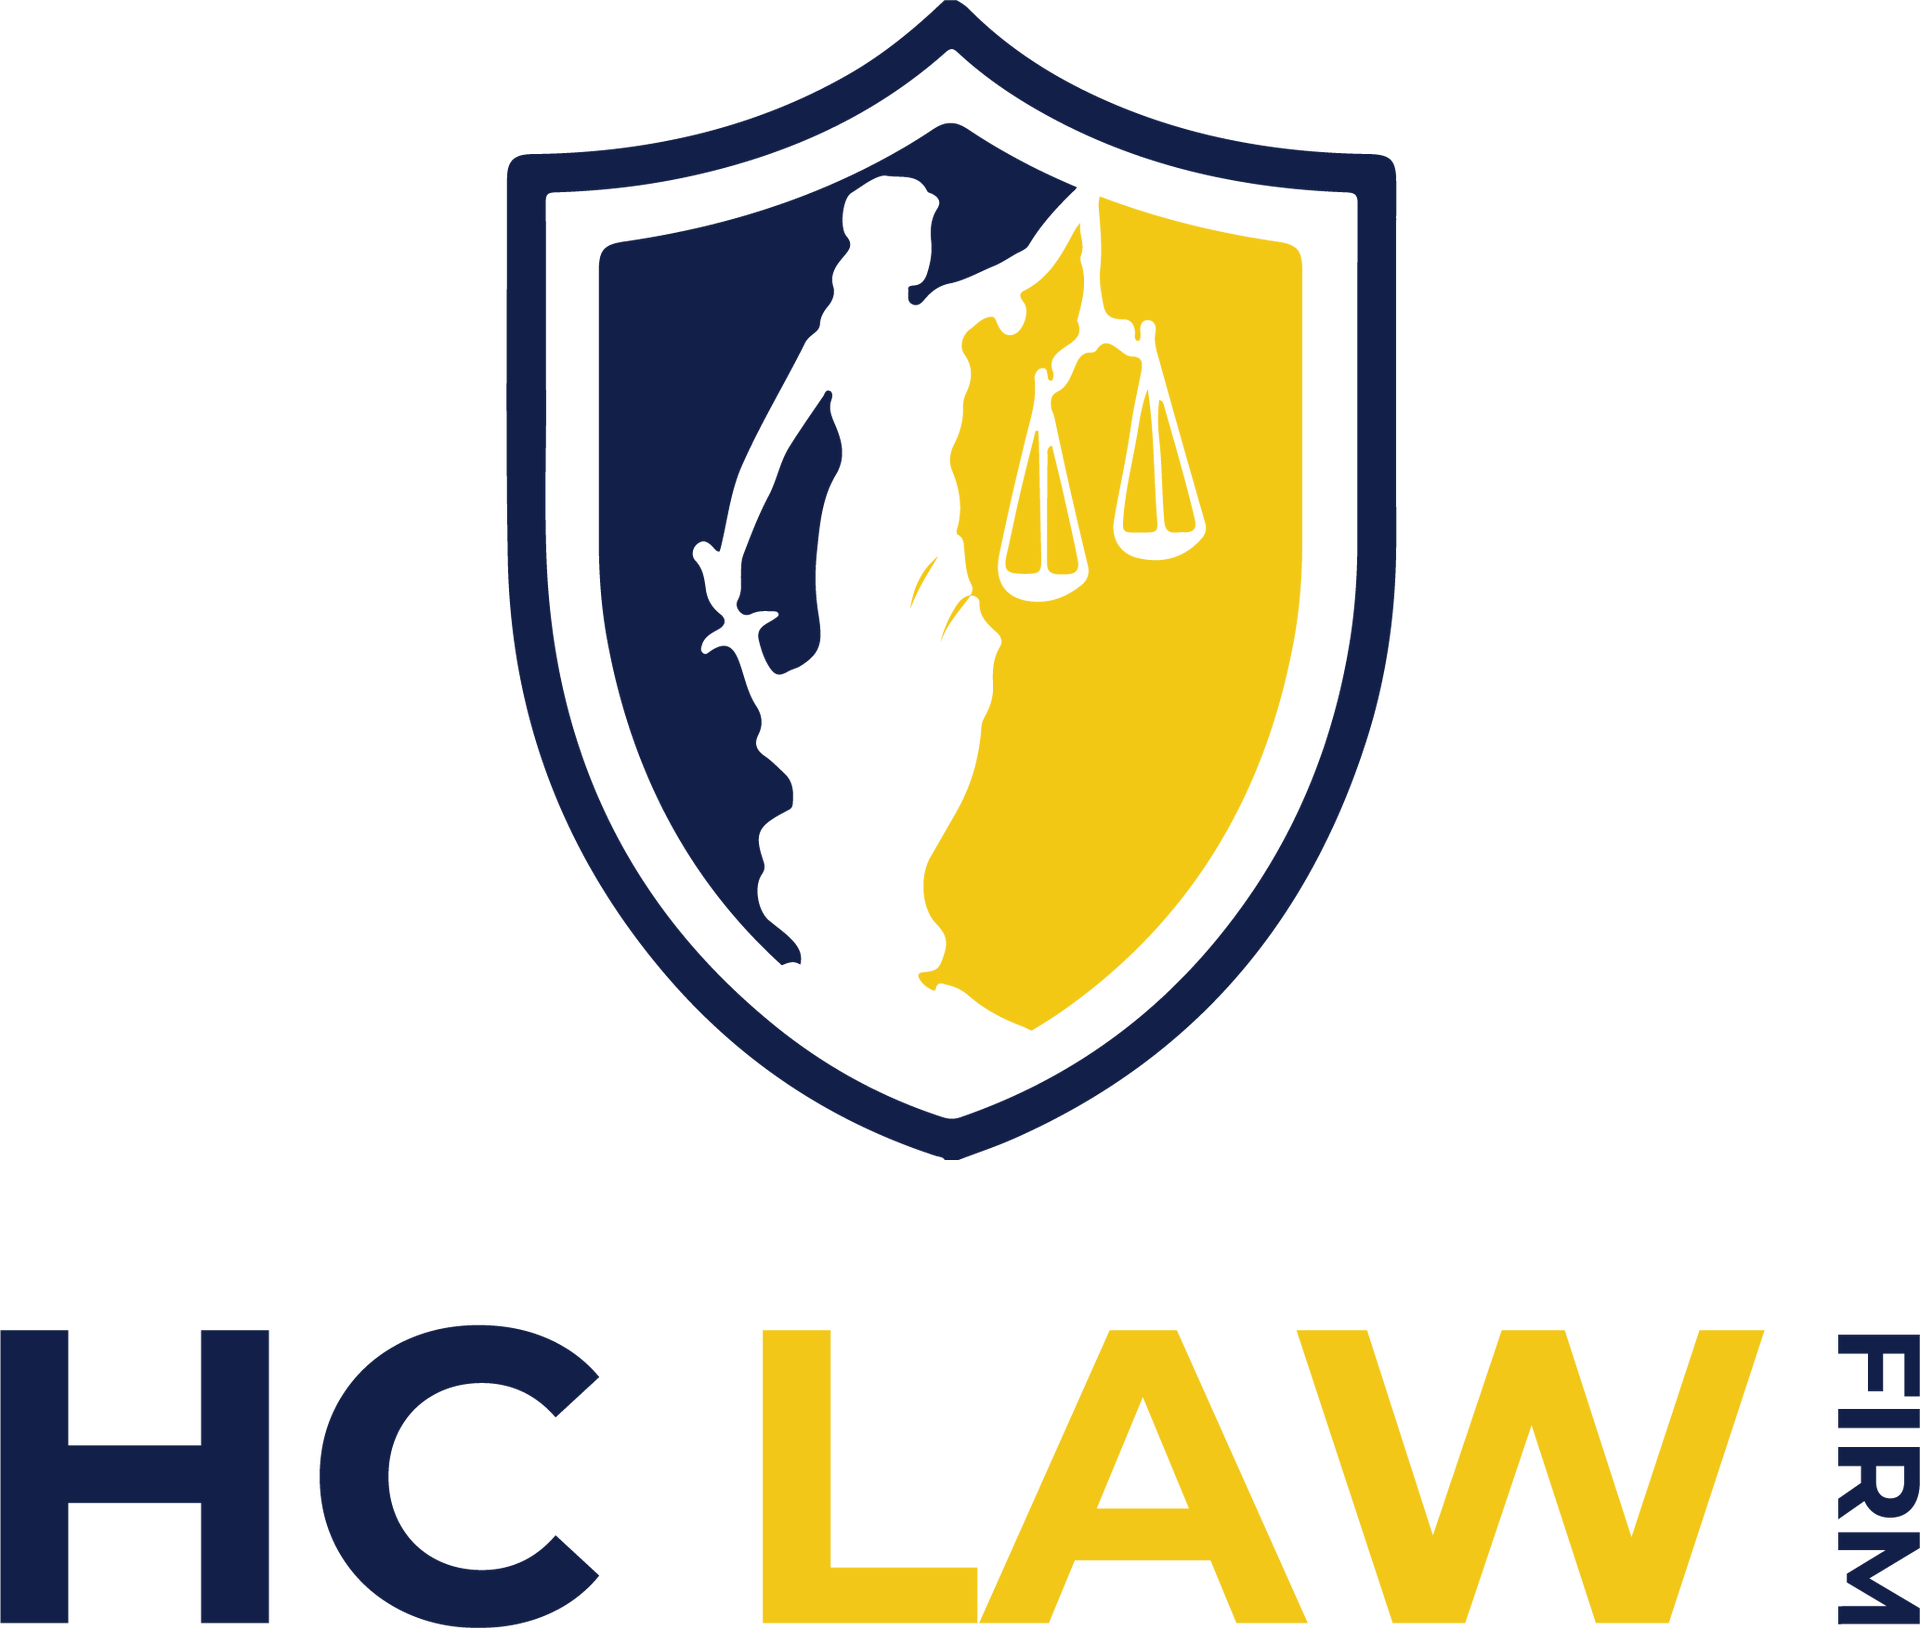 Hamilton & Childs Law, PLLC